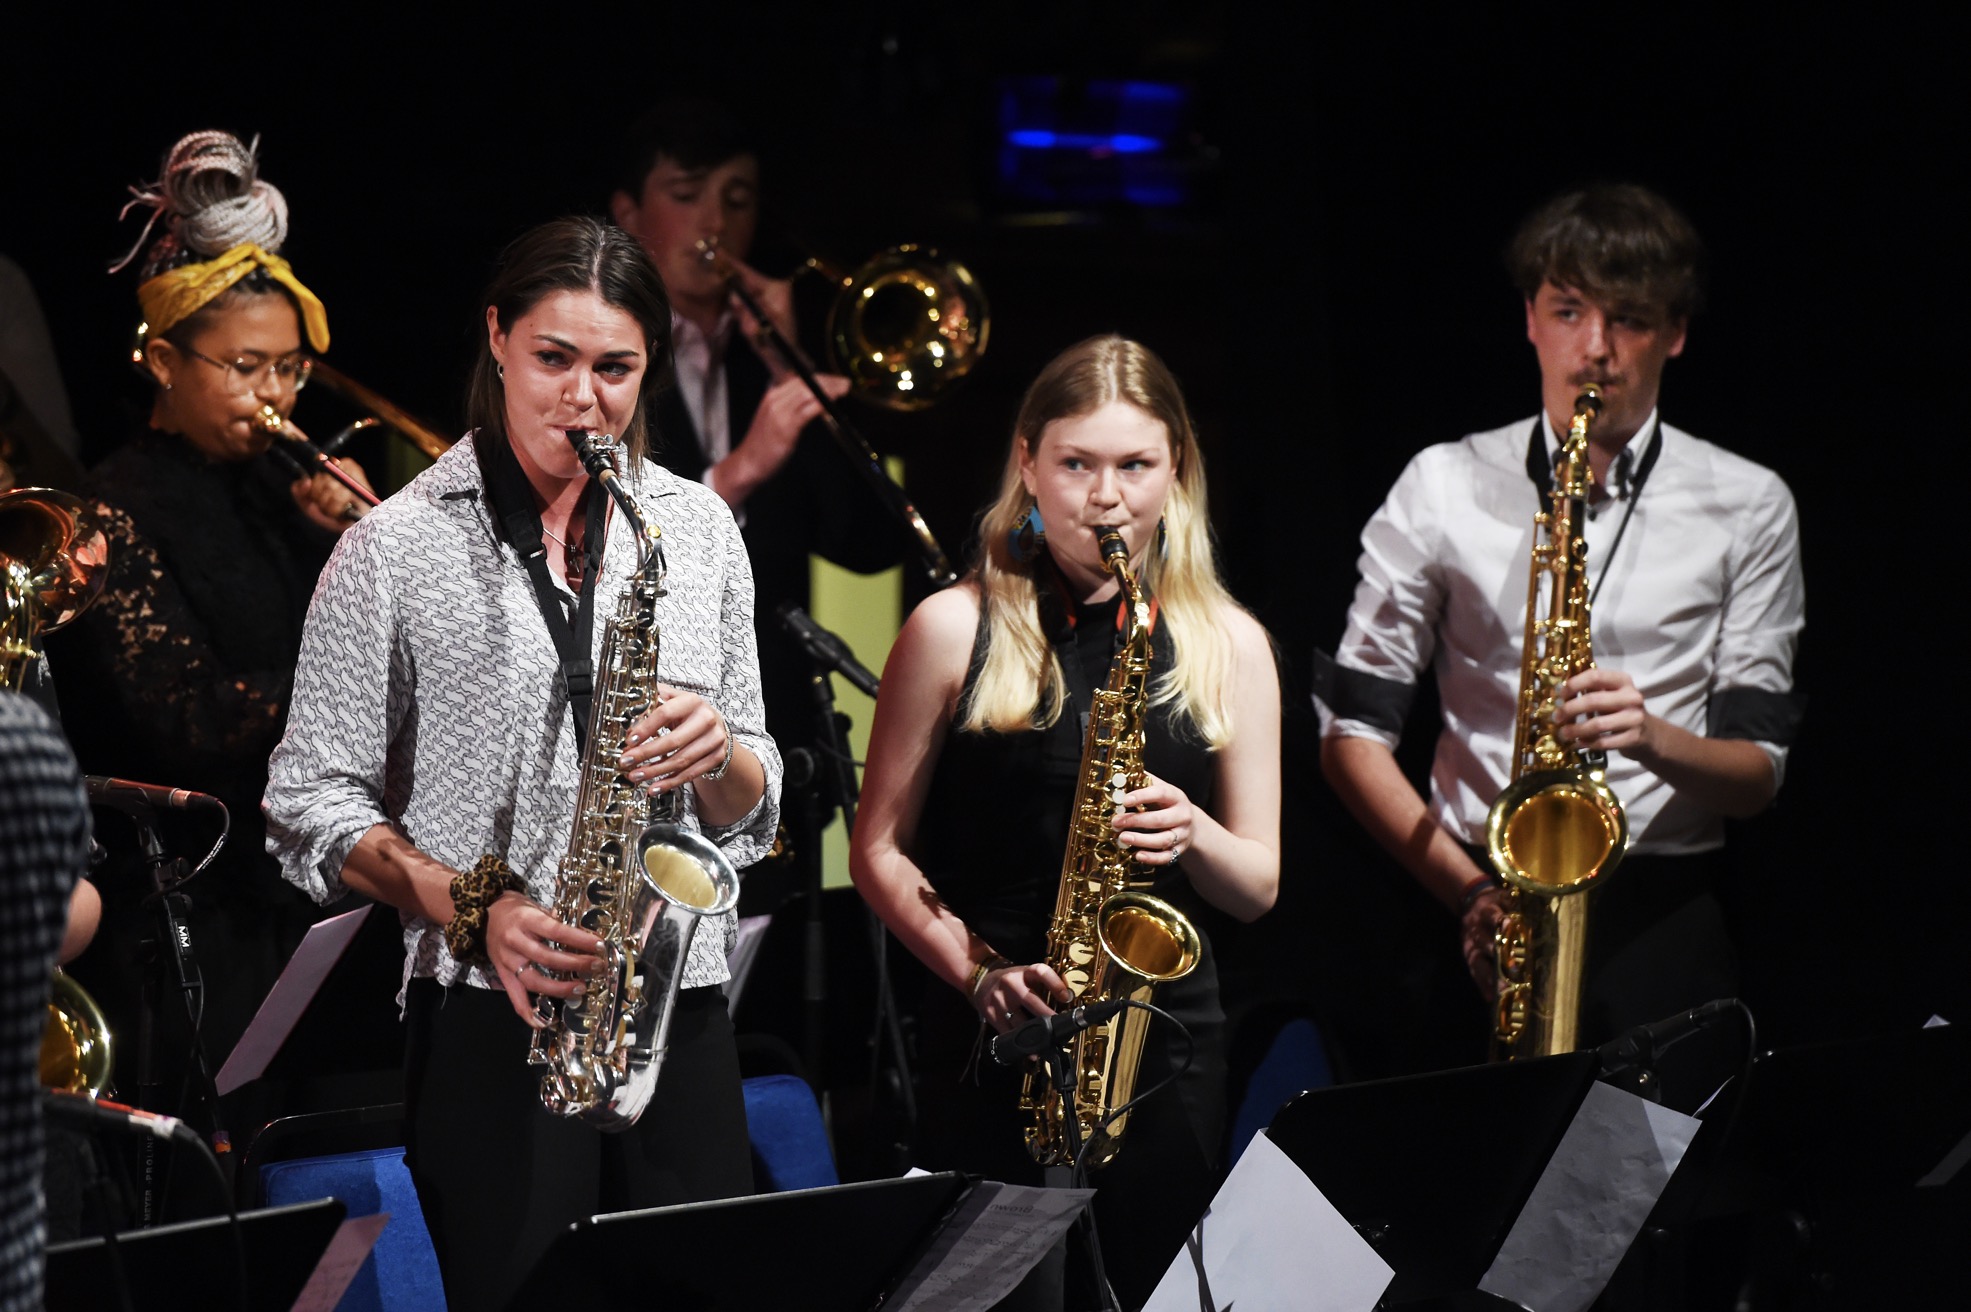 Saxophonists Appin Mackay-Champion, Tallulah Molleson and Jack Schendel performing at Edinburgh Jazz & Blues Festival hub venue, Teviot Row, 22 July 2018